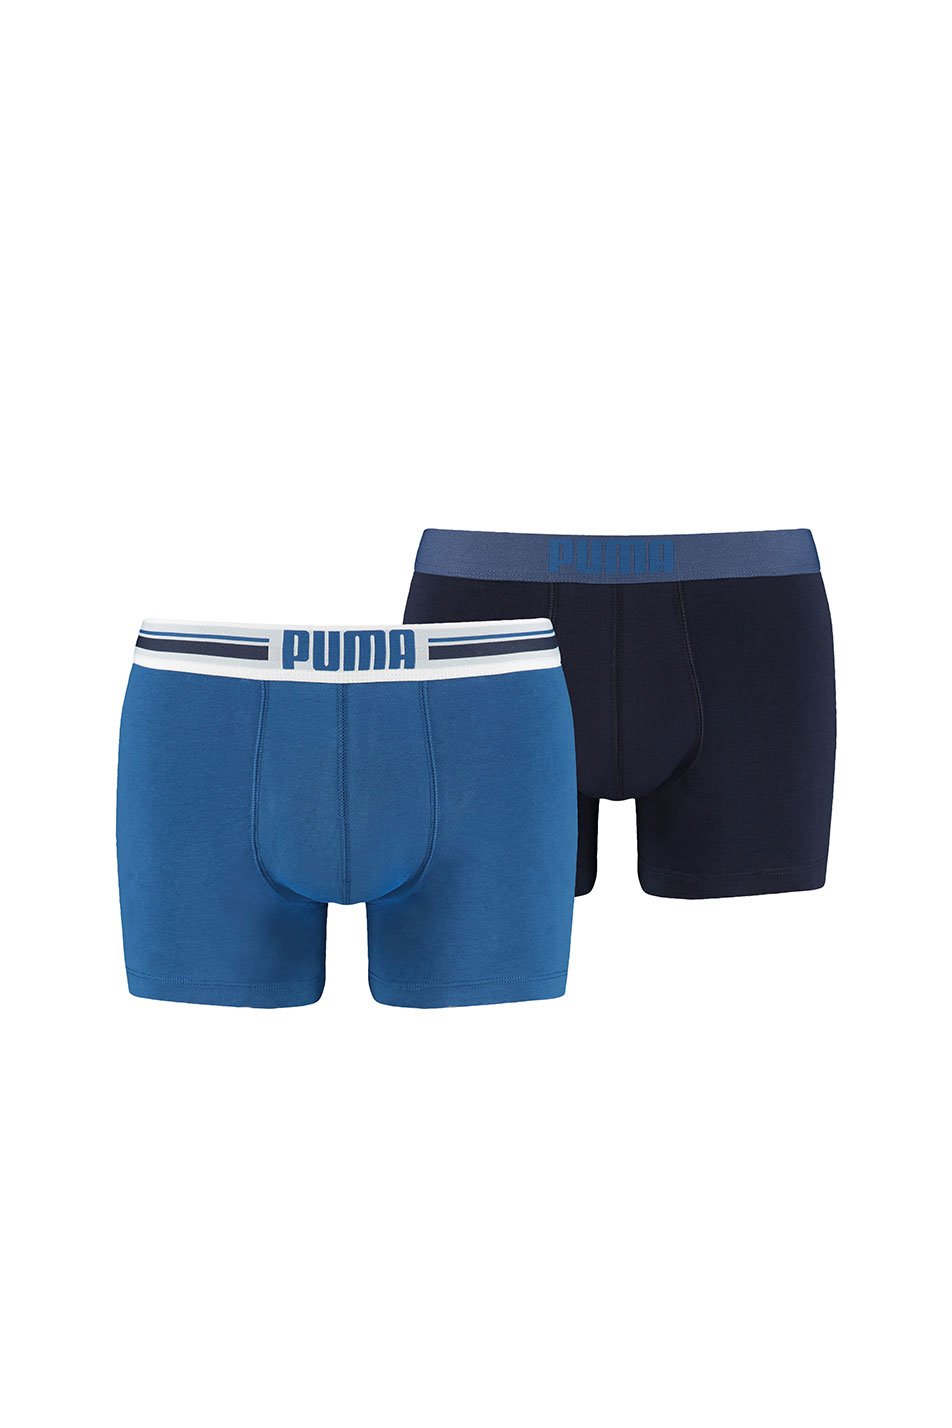 Puma Placed Logo Men's Boxer 2 Pack